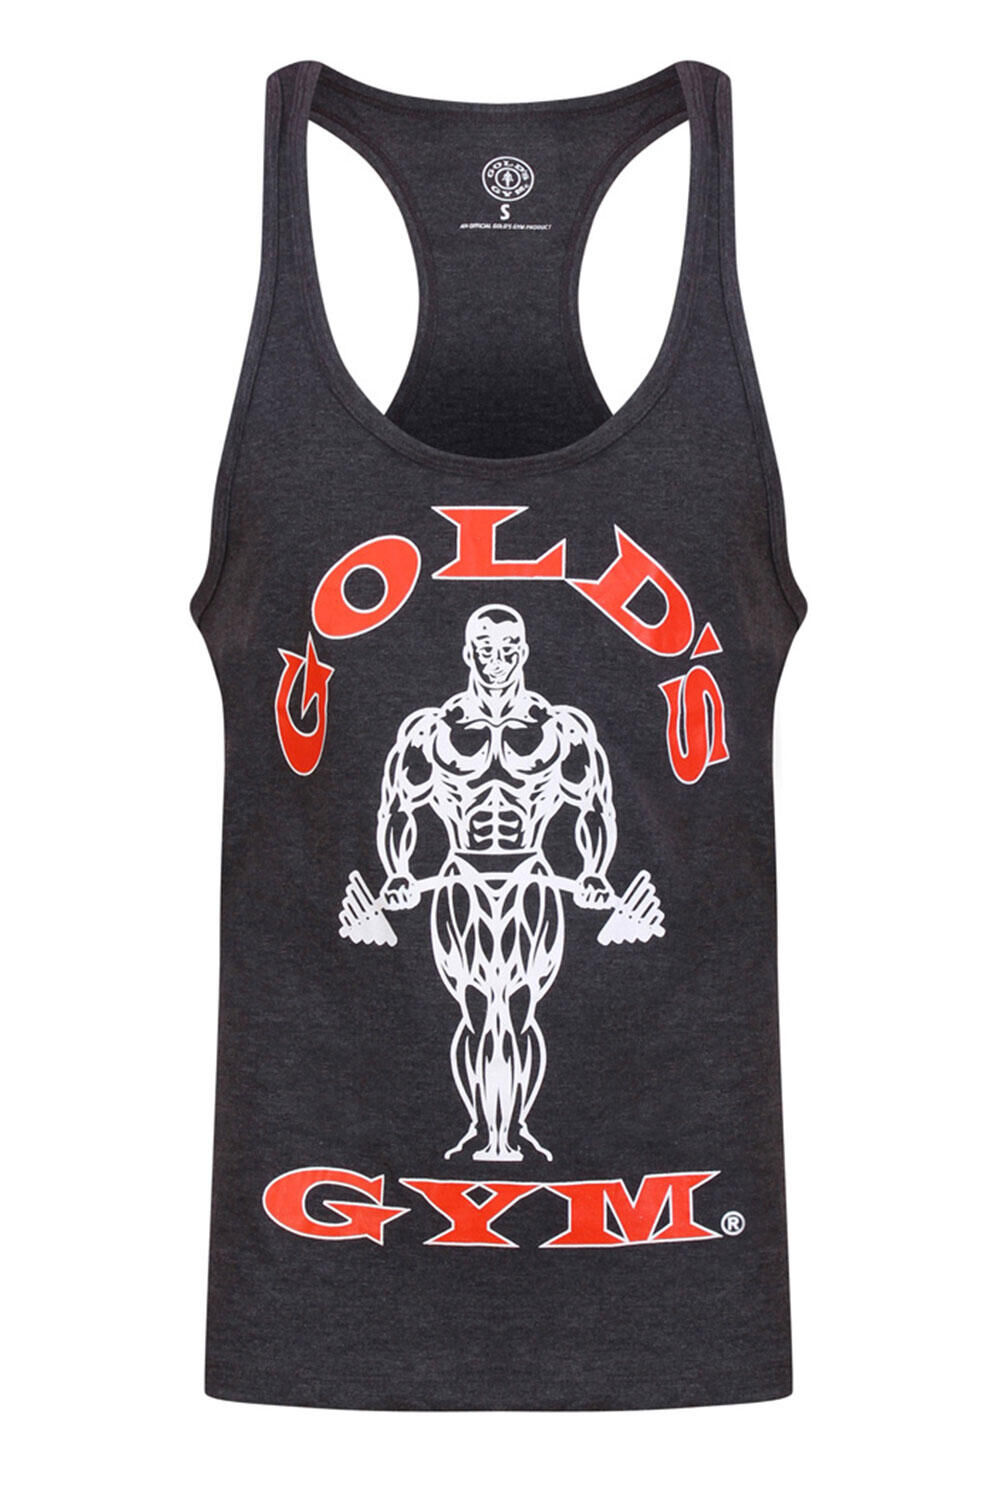 GOLD'S GYM Men's Gold's Gym Muscle Joe Print Premium Stringer Vest